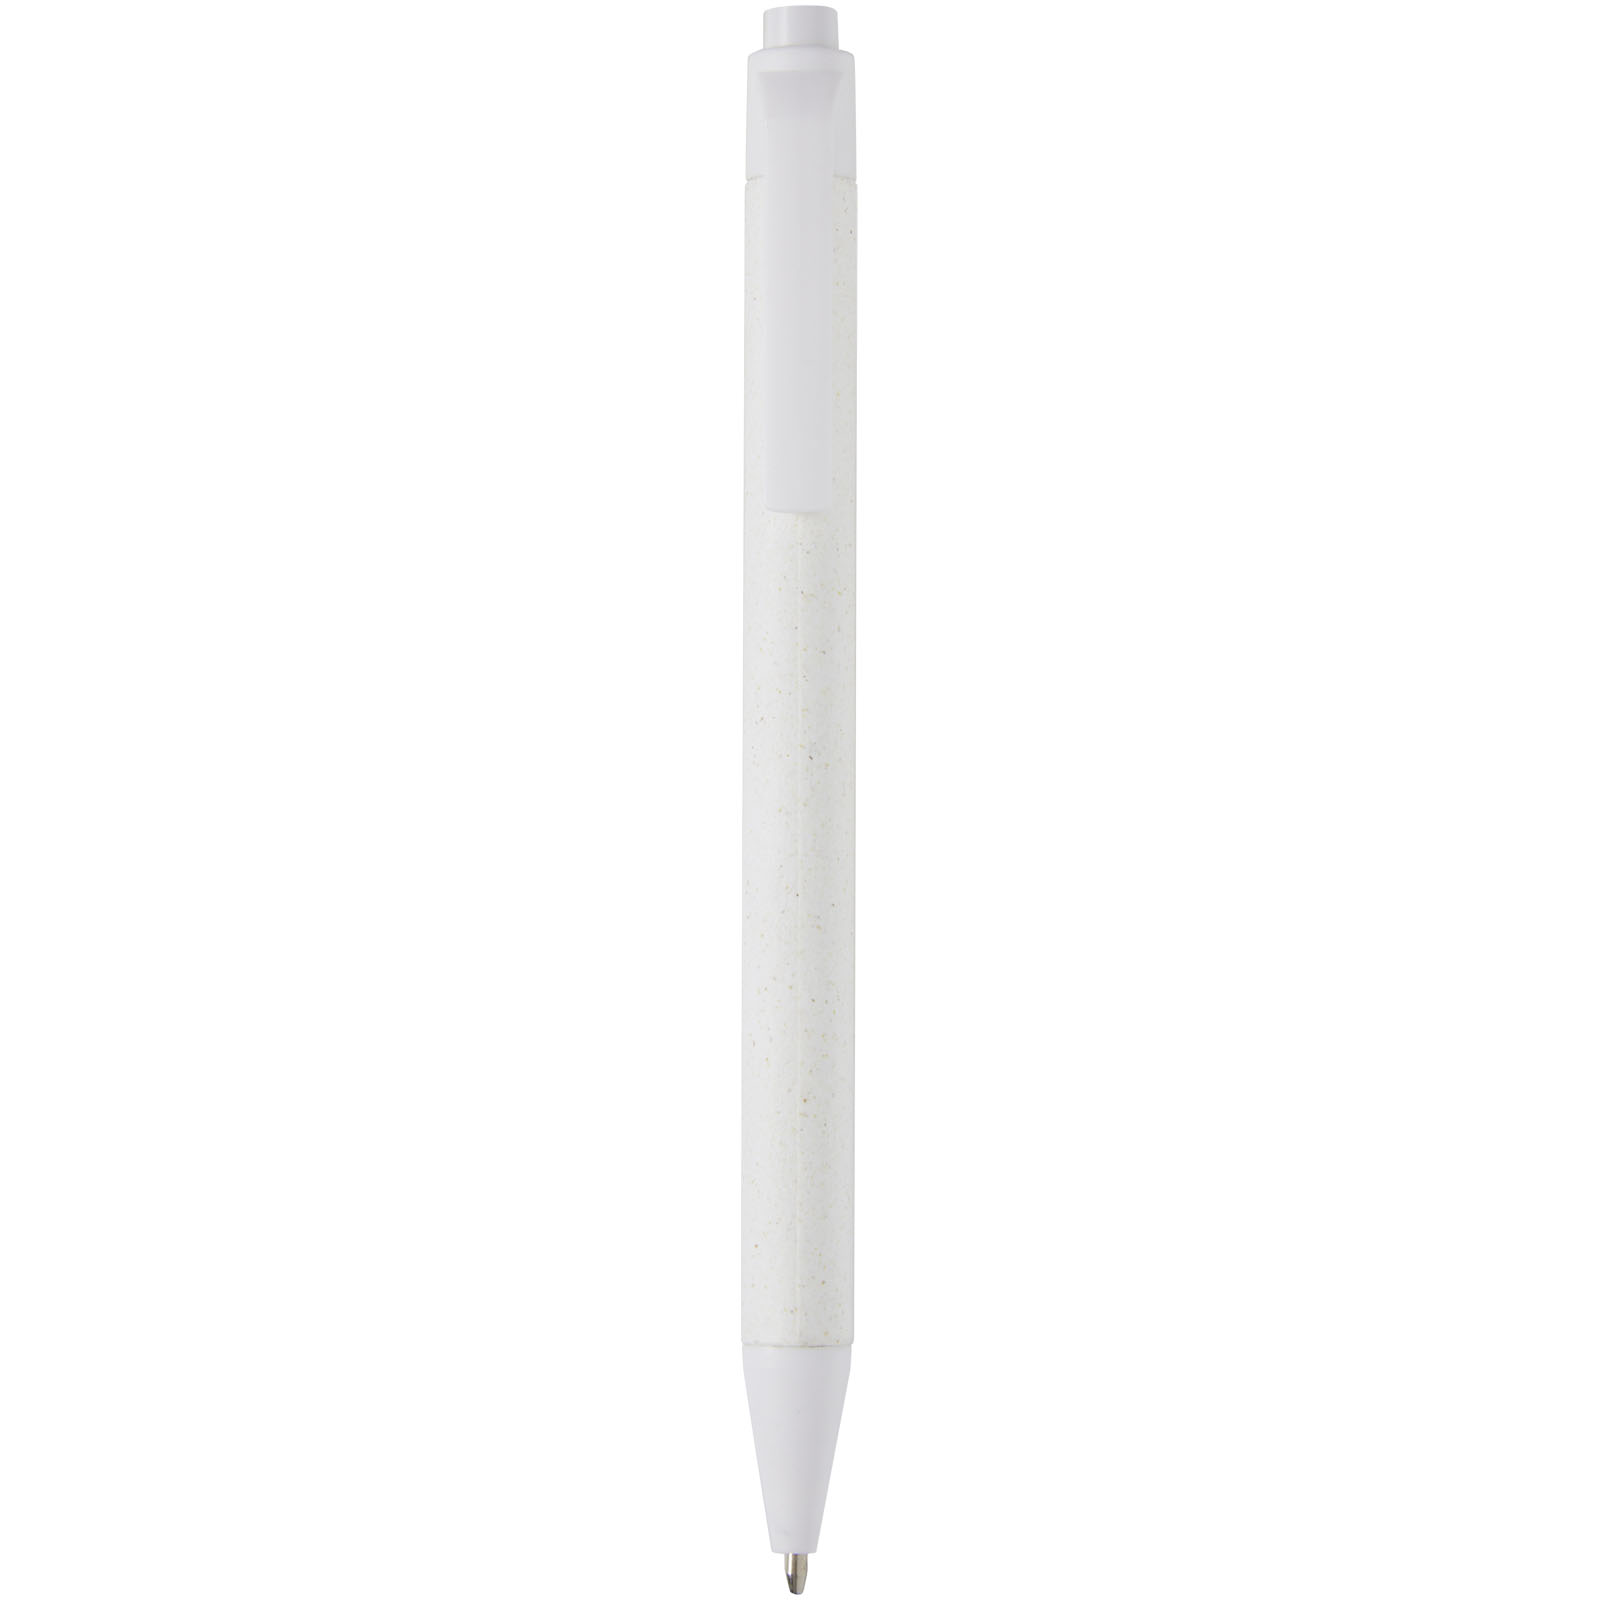 Advertising Ballpoint Pens - Fabianna crush paper ballpoint pen - 0